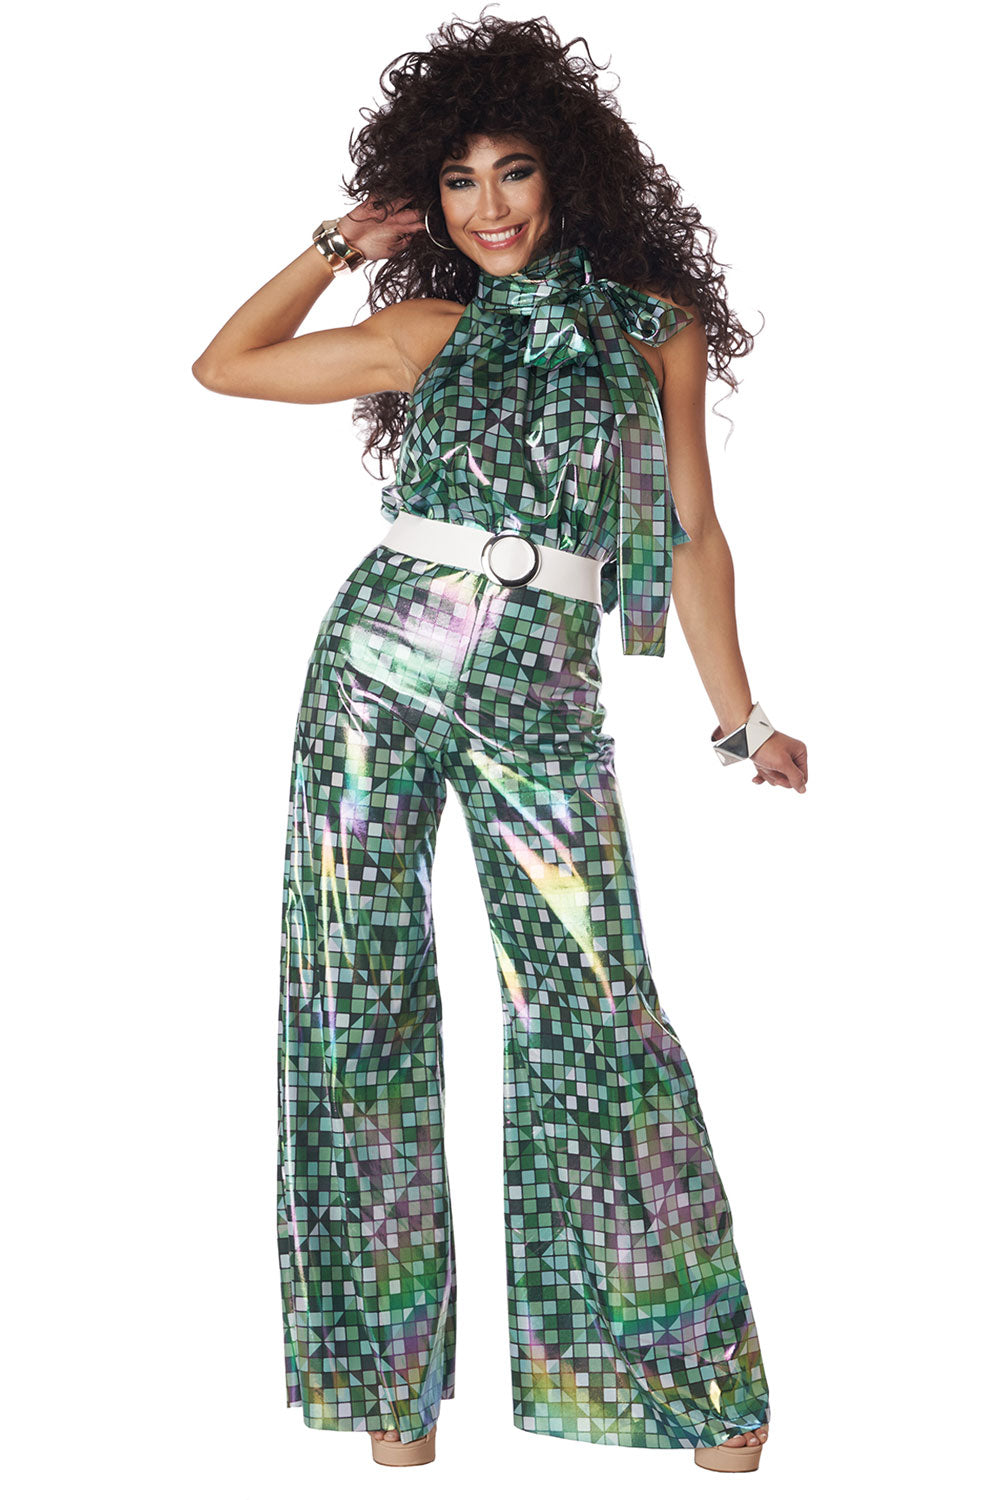 Disco Lady / Adult California Costume 5021-198